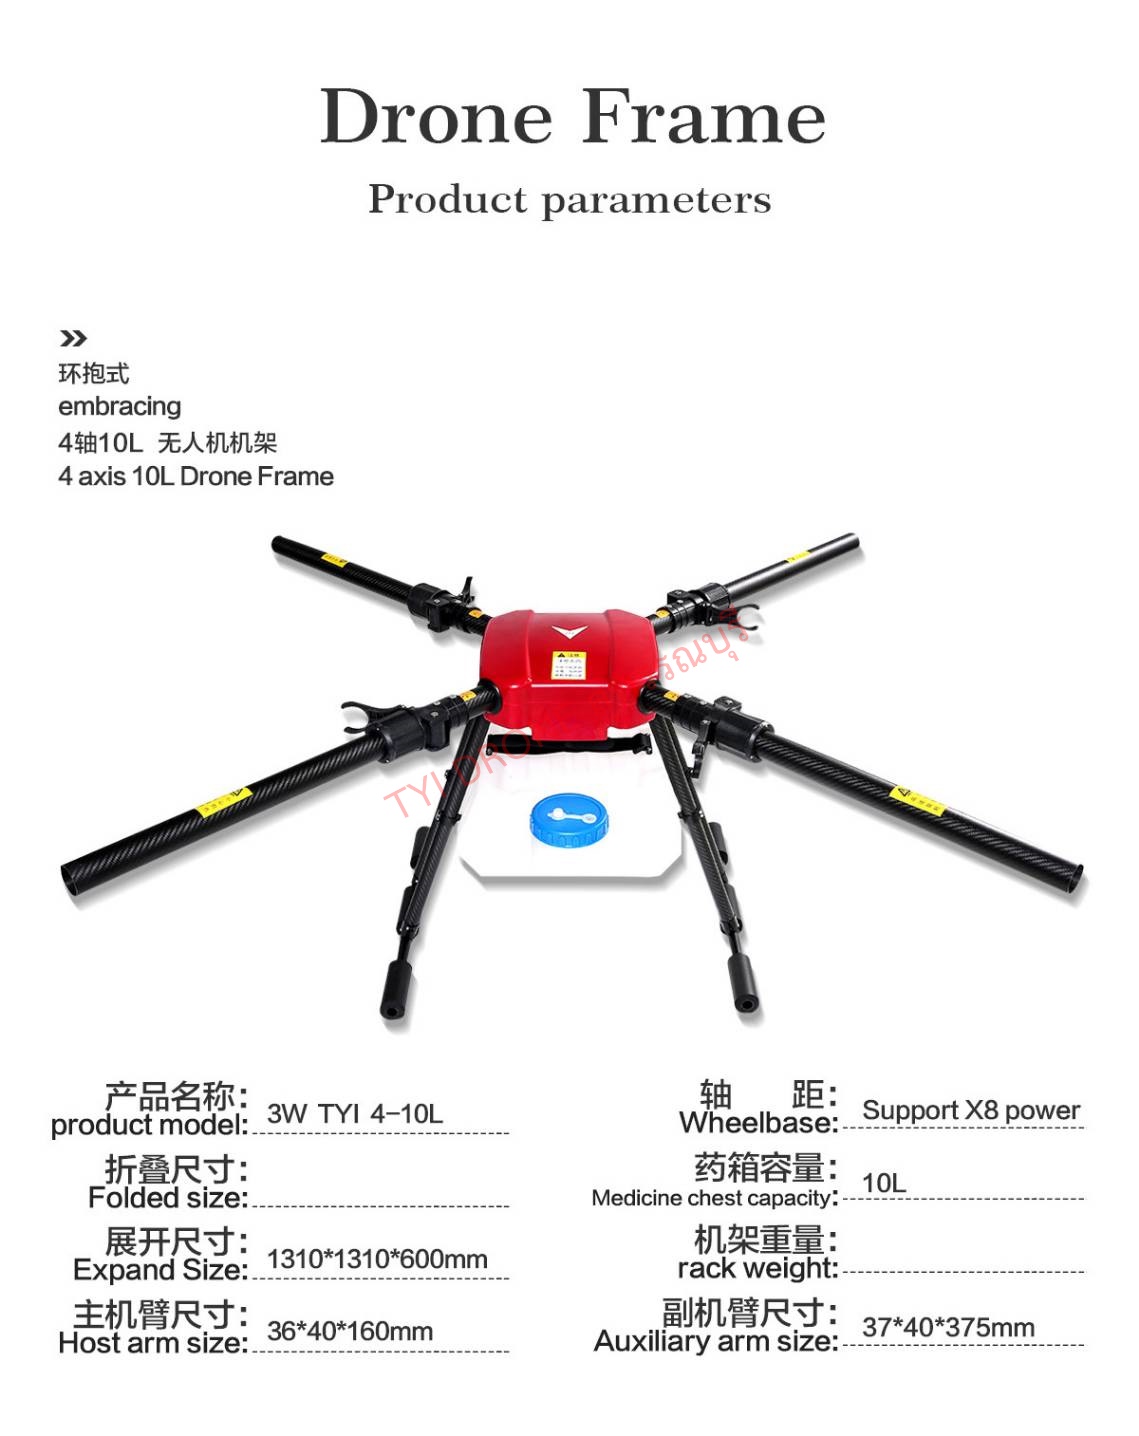 4-10L drone frame(เฟรมโดรนTYI) กรุณาติดต่อก่อนสั่งซื้อสินค้านะค่ะ รูปที่ 1